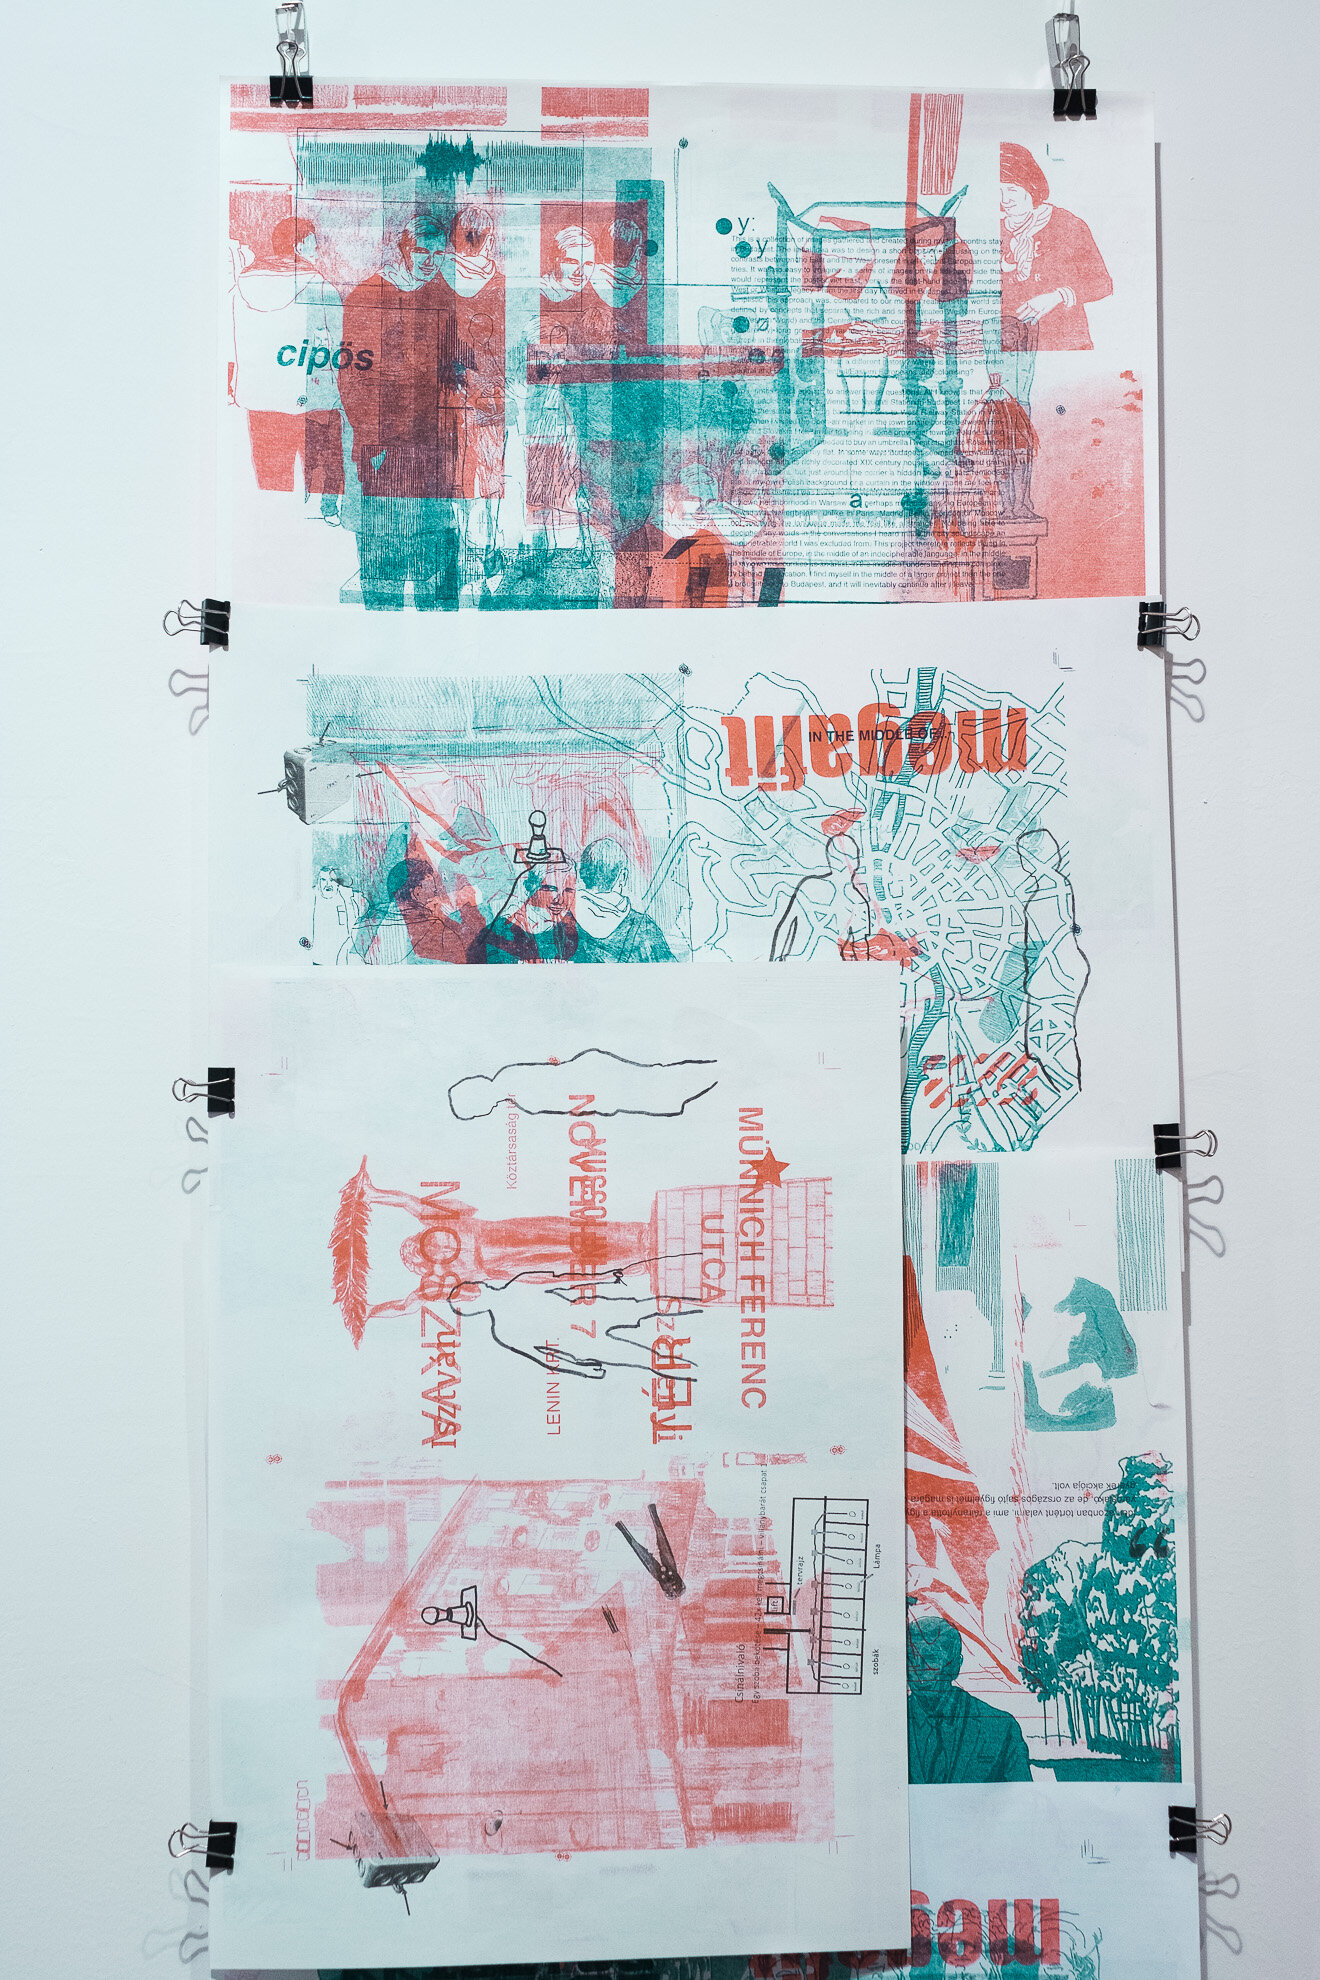  Book process, 2019, risograph print, 297 x 420mm 